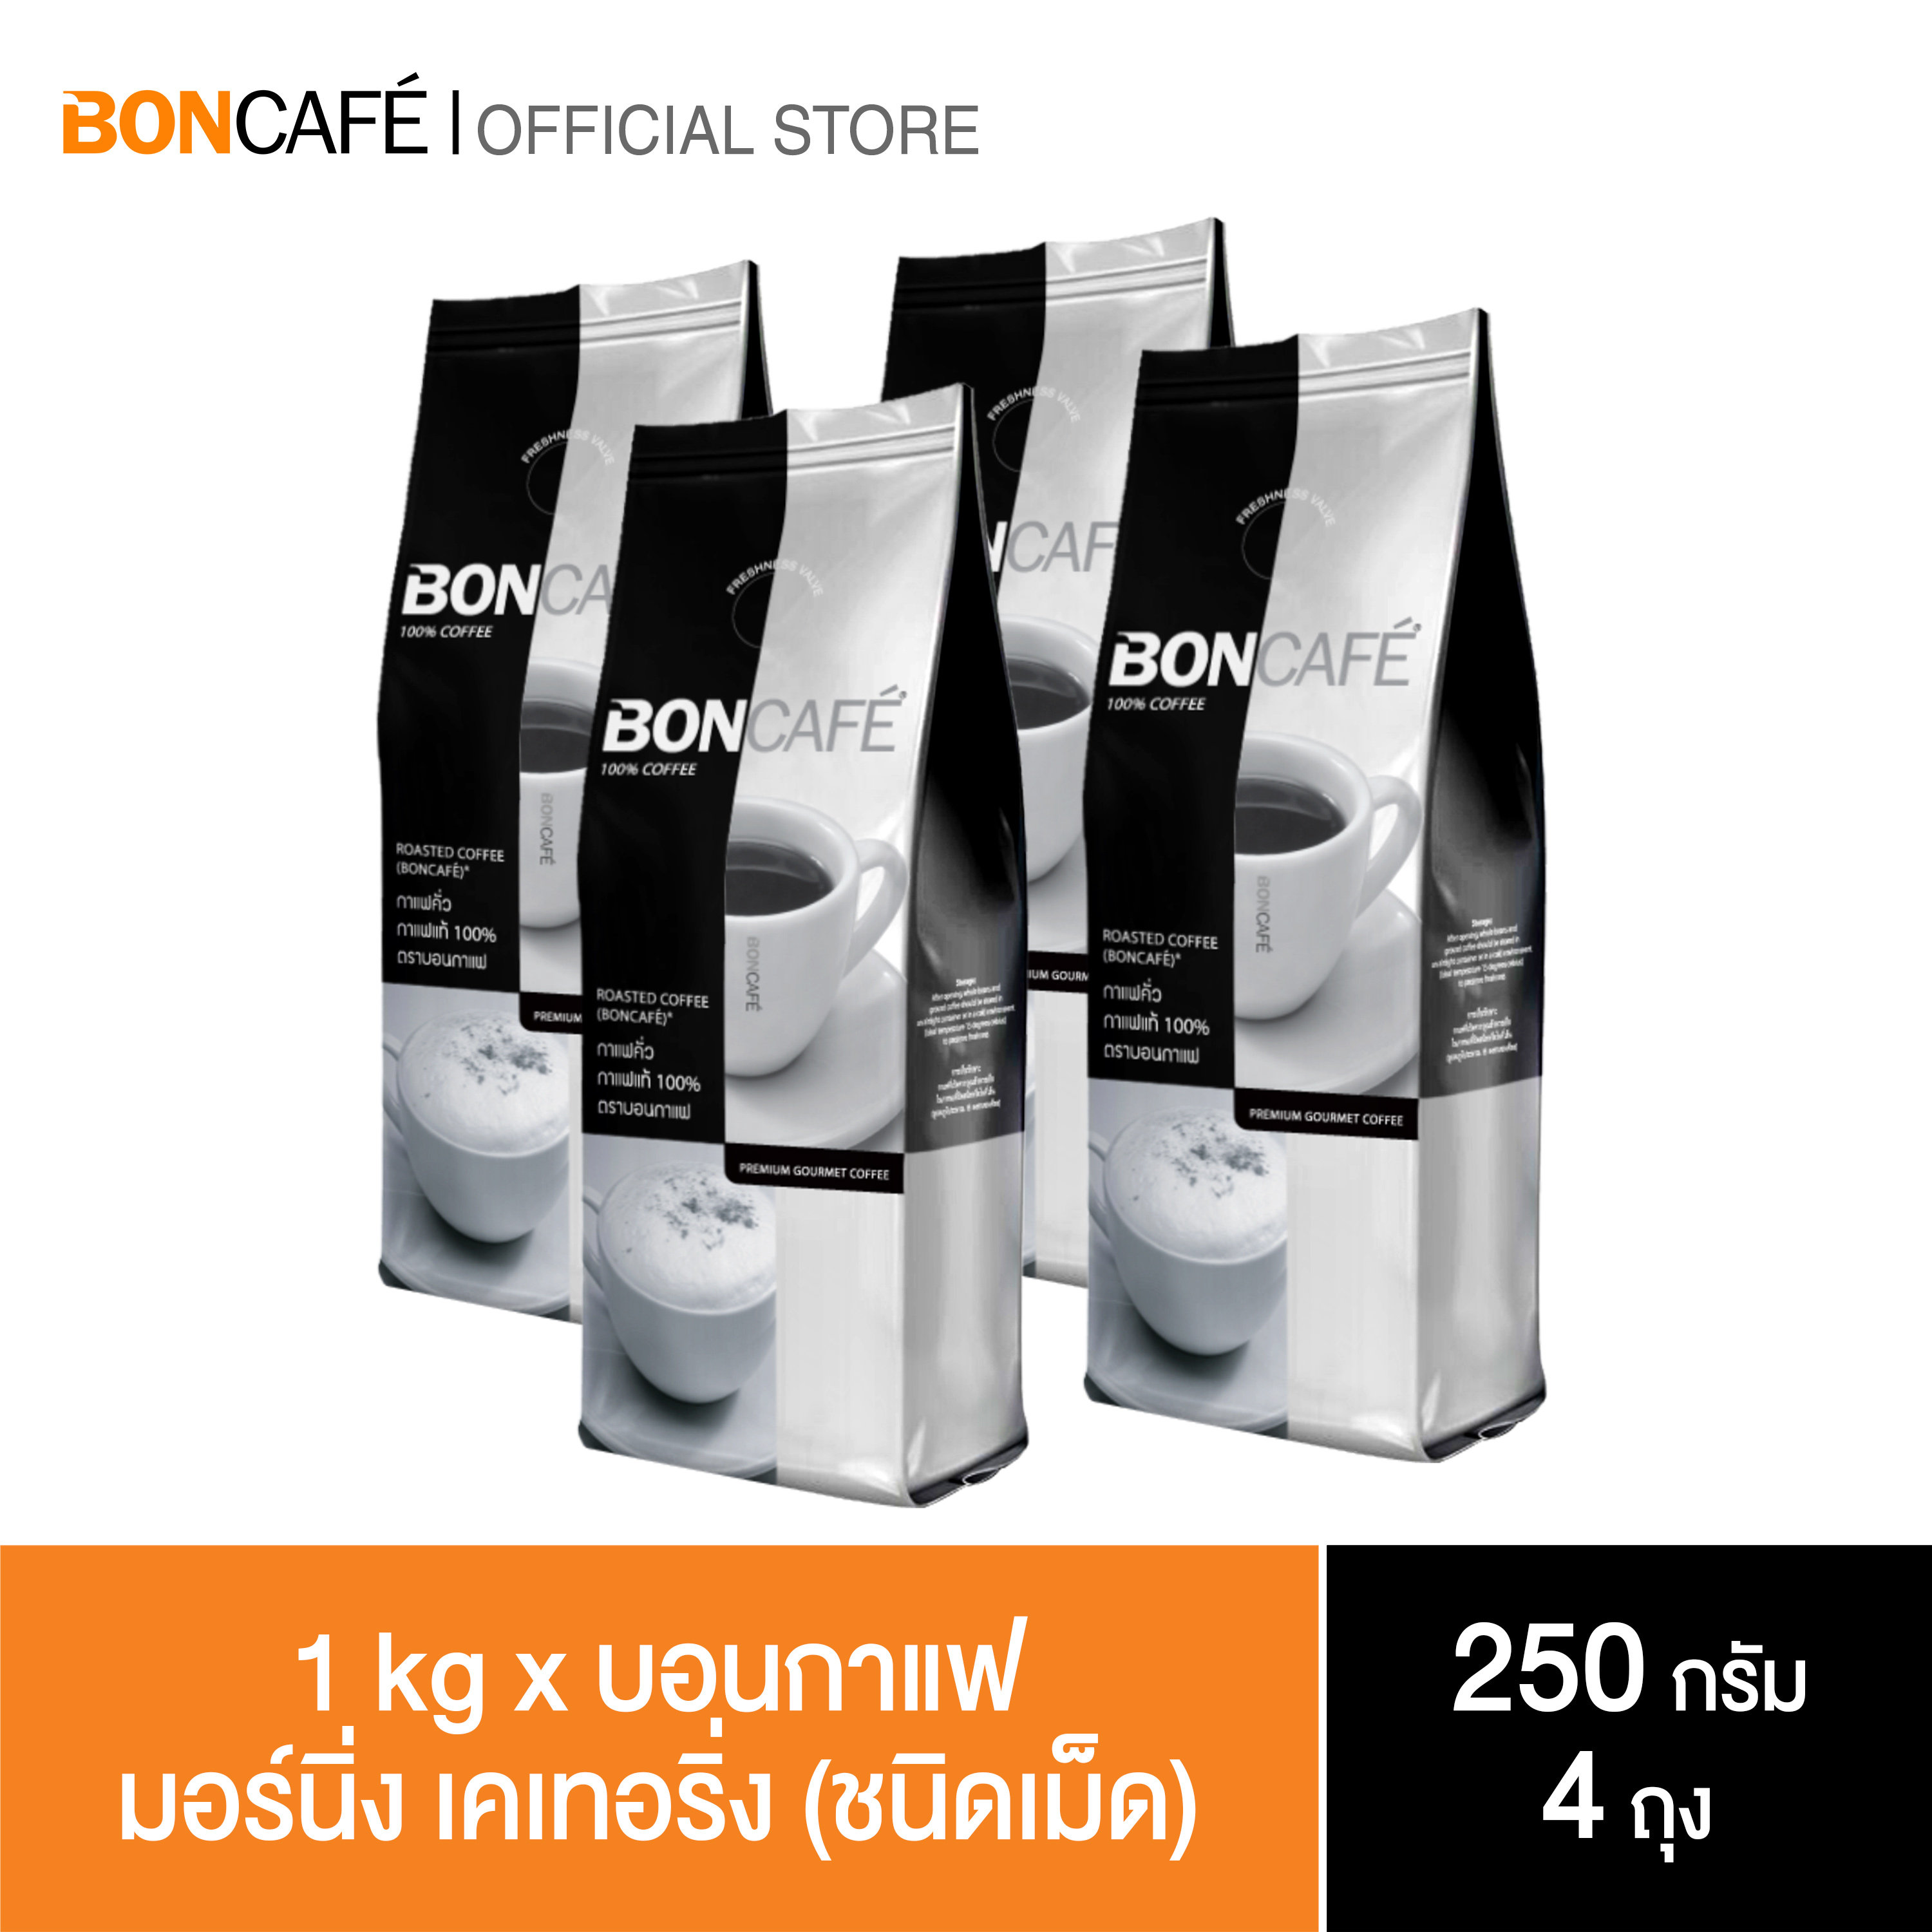 1 kg x Boncafe กาแฟคั่วเม็ด บอนกาแฟ มอร์นิ่ง  แคทเทอริ่ง (ชนิดเม็ด) BONCAFE Morning Catering Bean 250g.